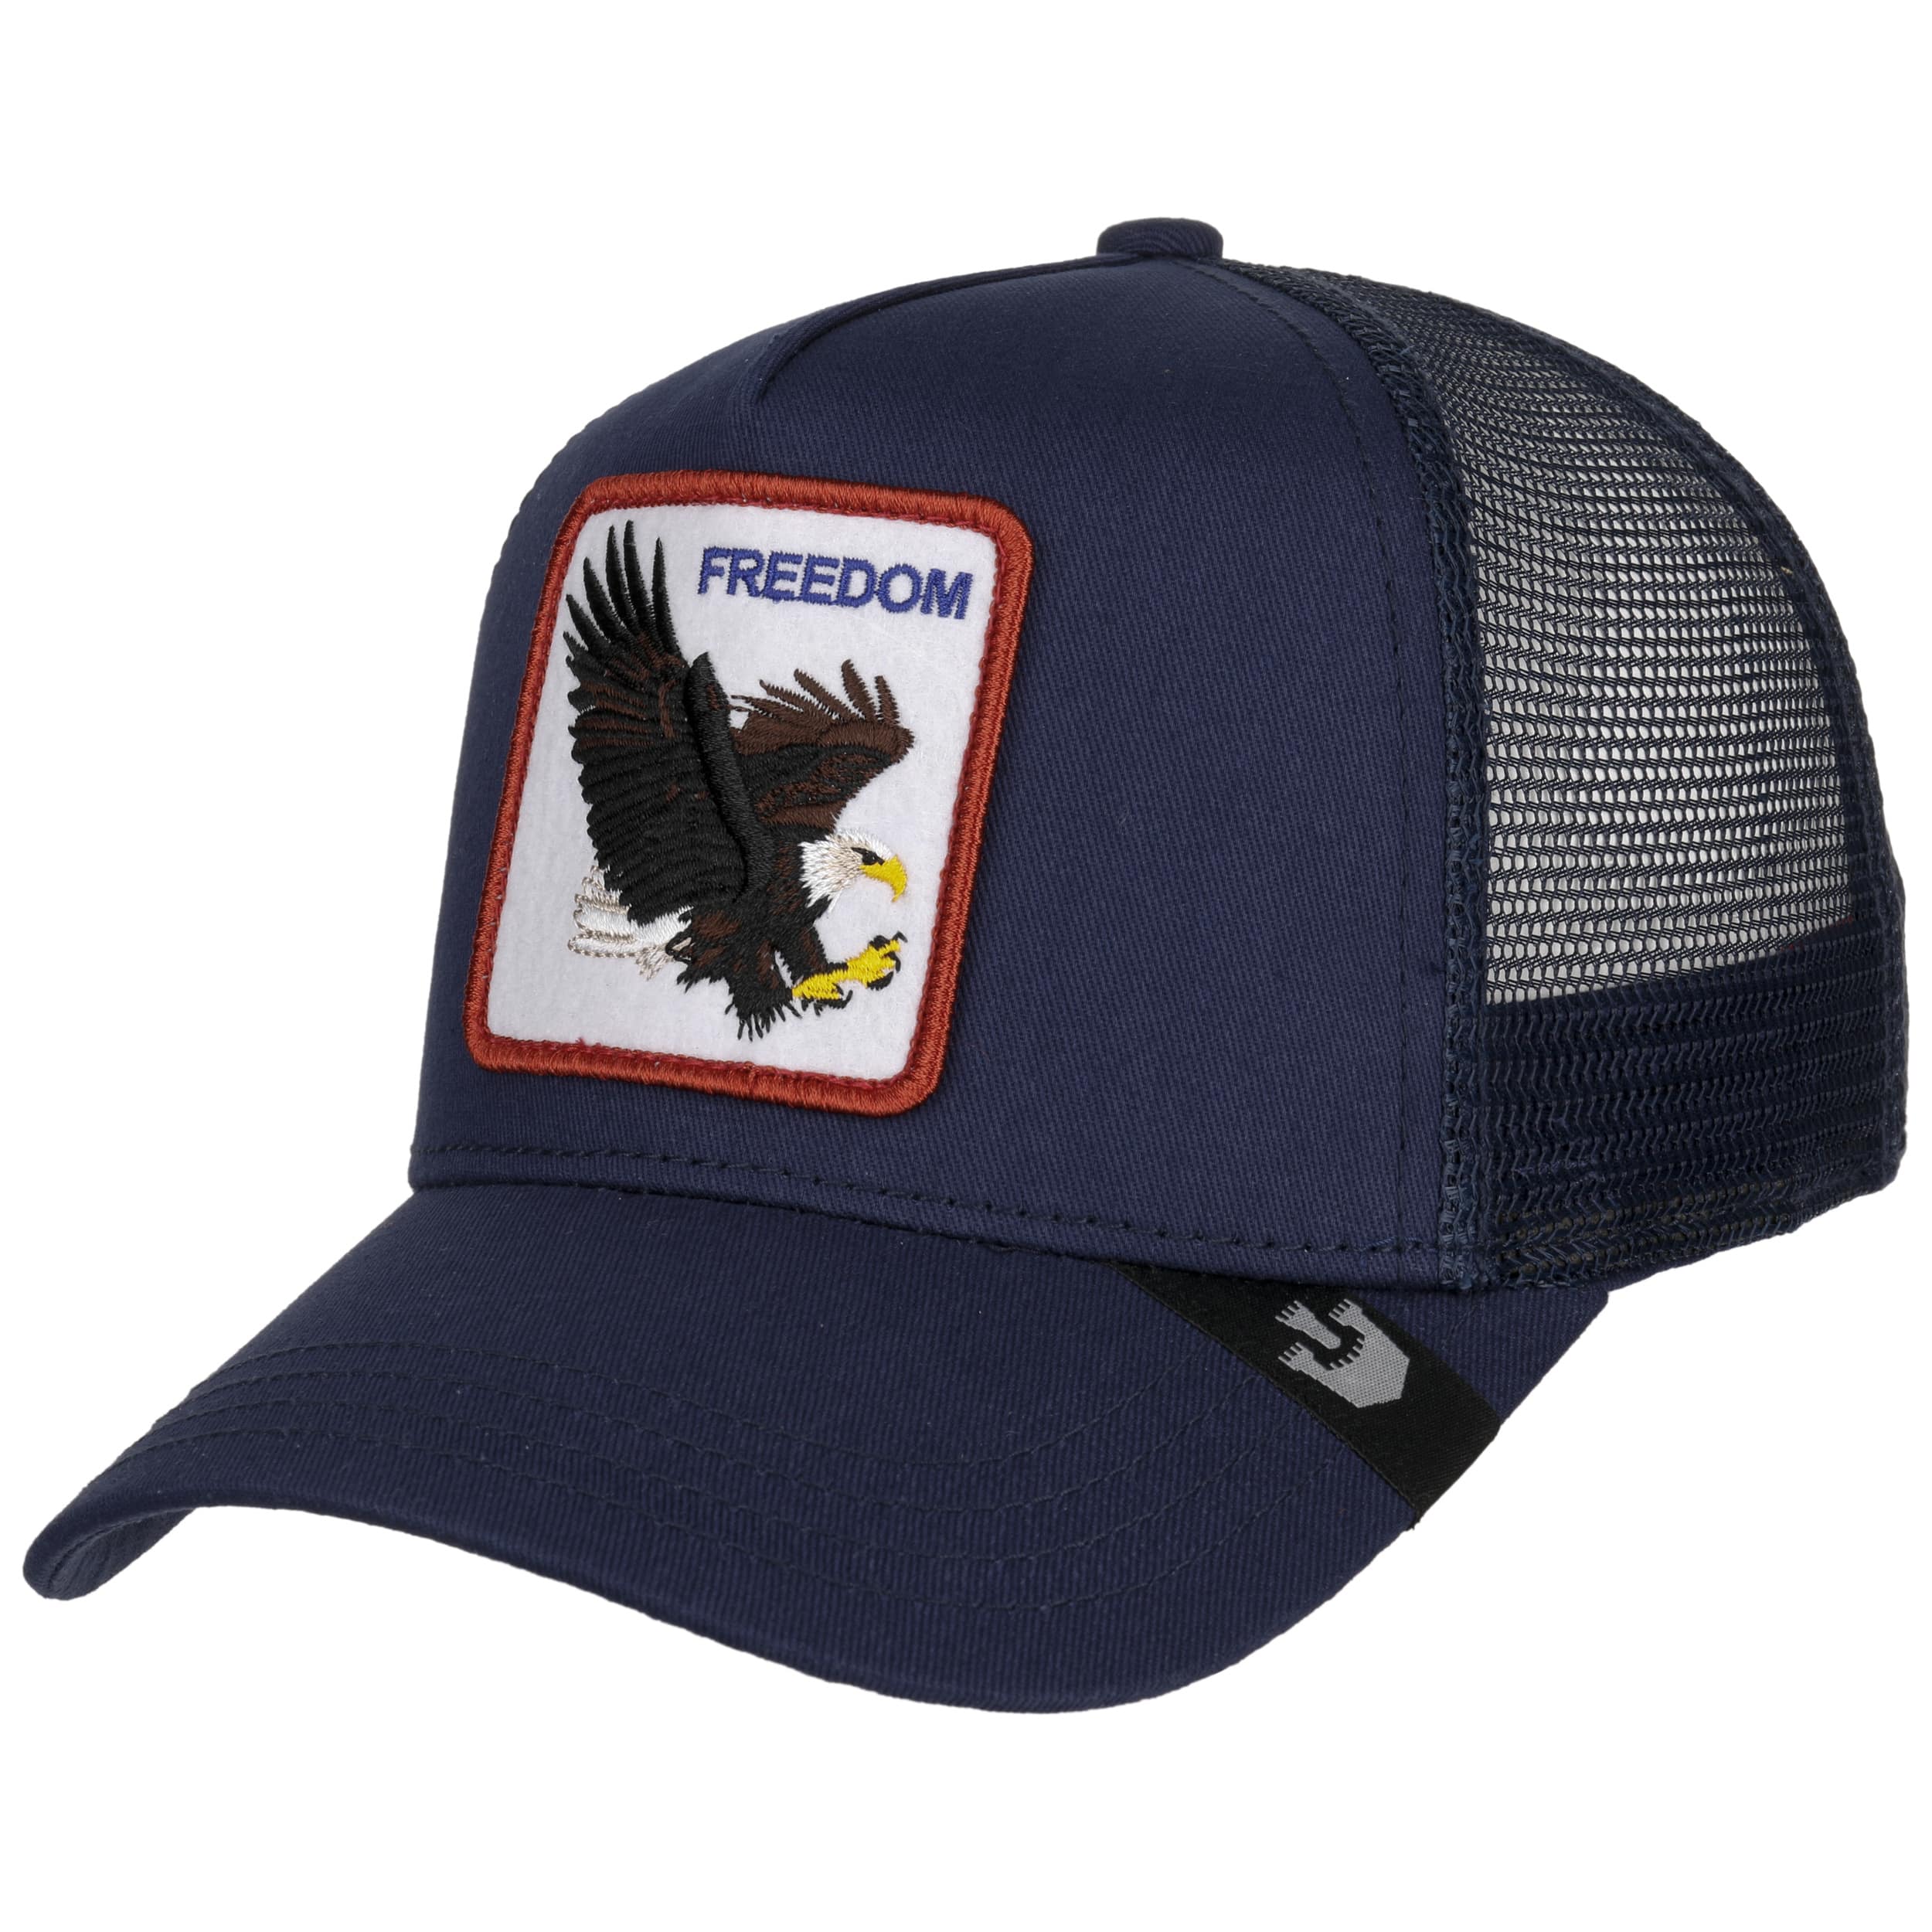 The Freedom Eagle Trucker Cap by Goorin Bros. - 50,95 €